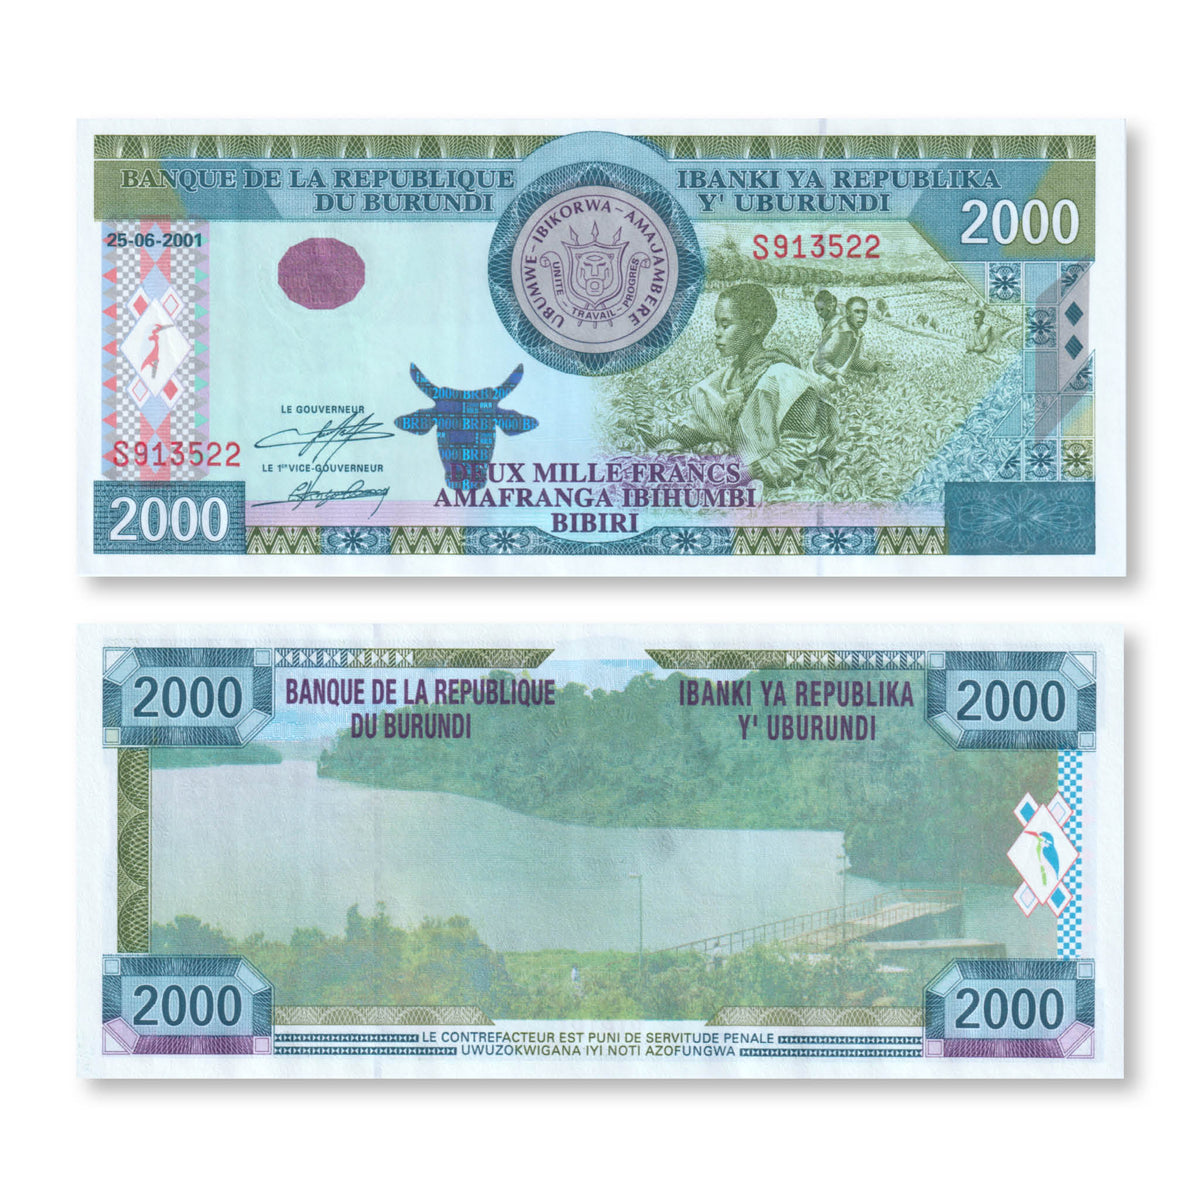 Burundi 2000 Francs, 2001, B228a, P41a, UNC - Robert's World Money - World Banknotes